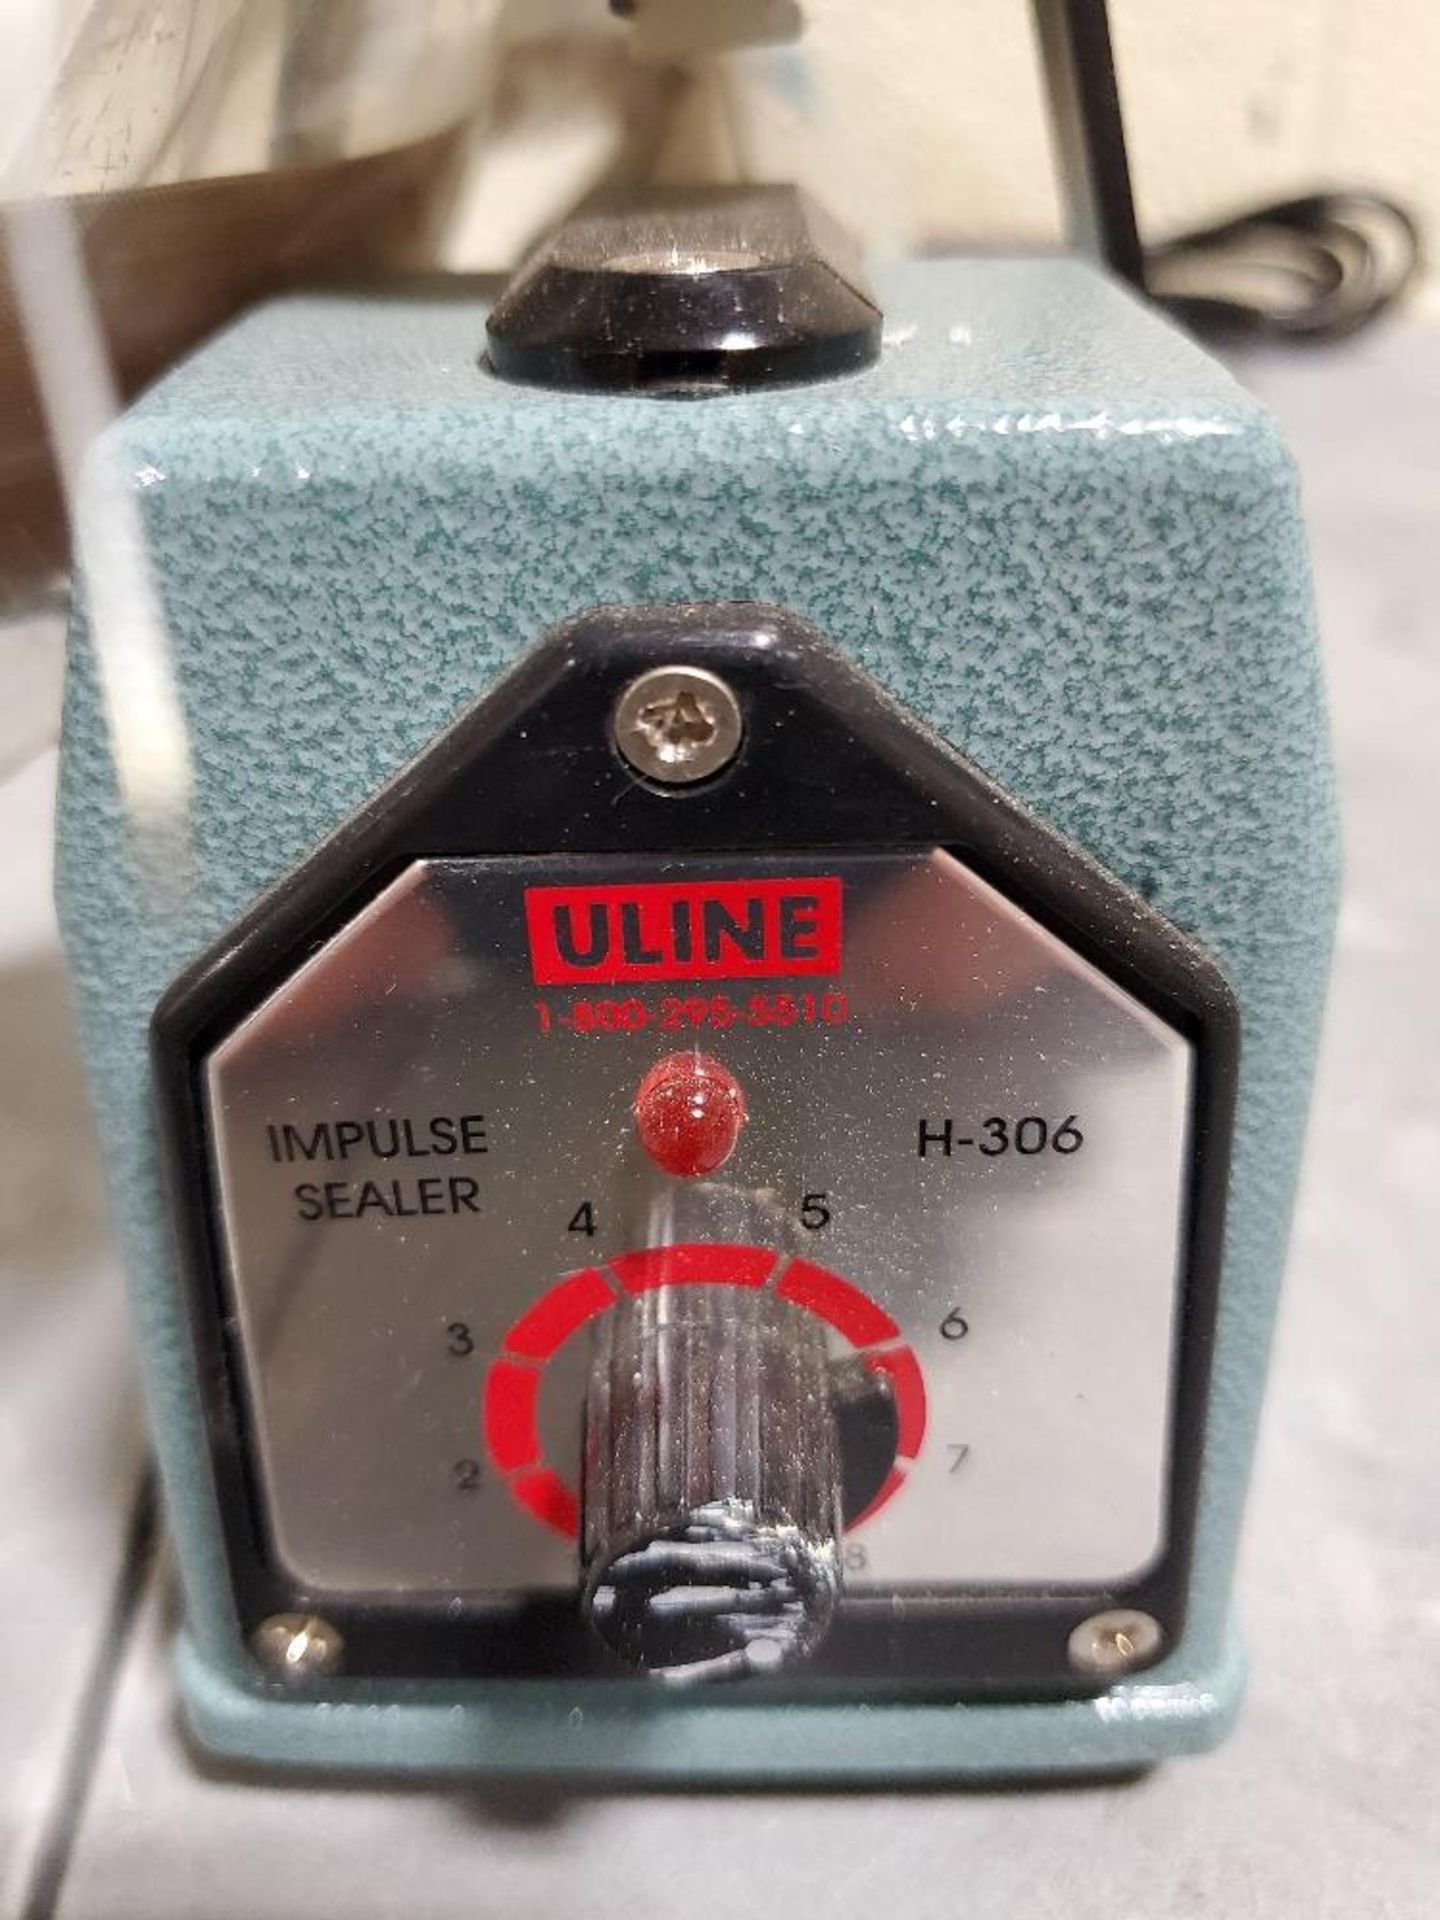 Uline H-306 Impulse Sealer, model KF-400H, 670 watts, 120 volts. - Image 2 of 4